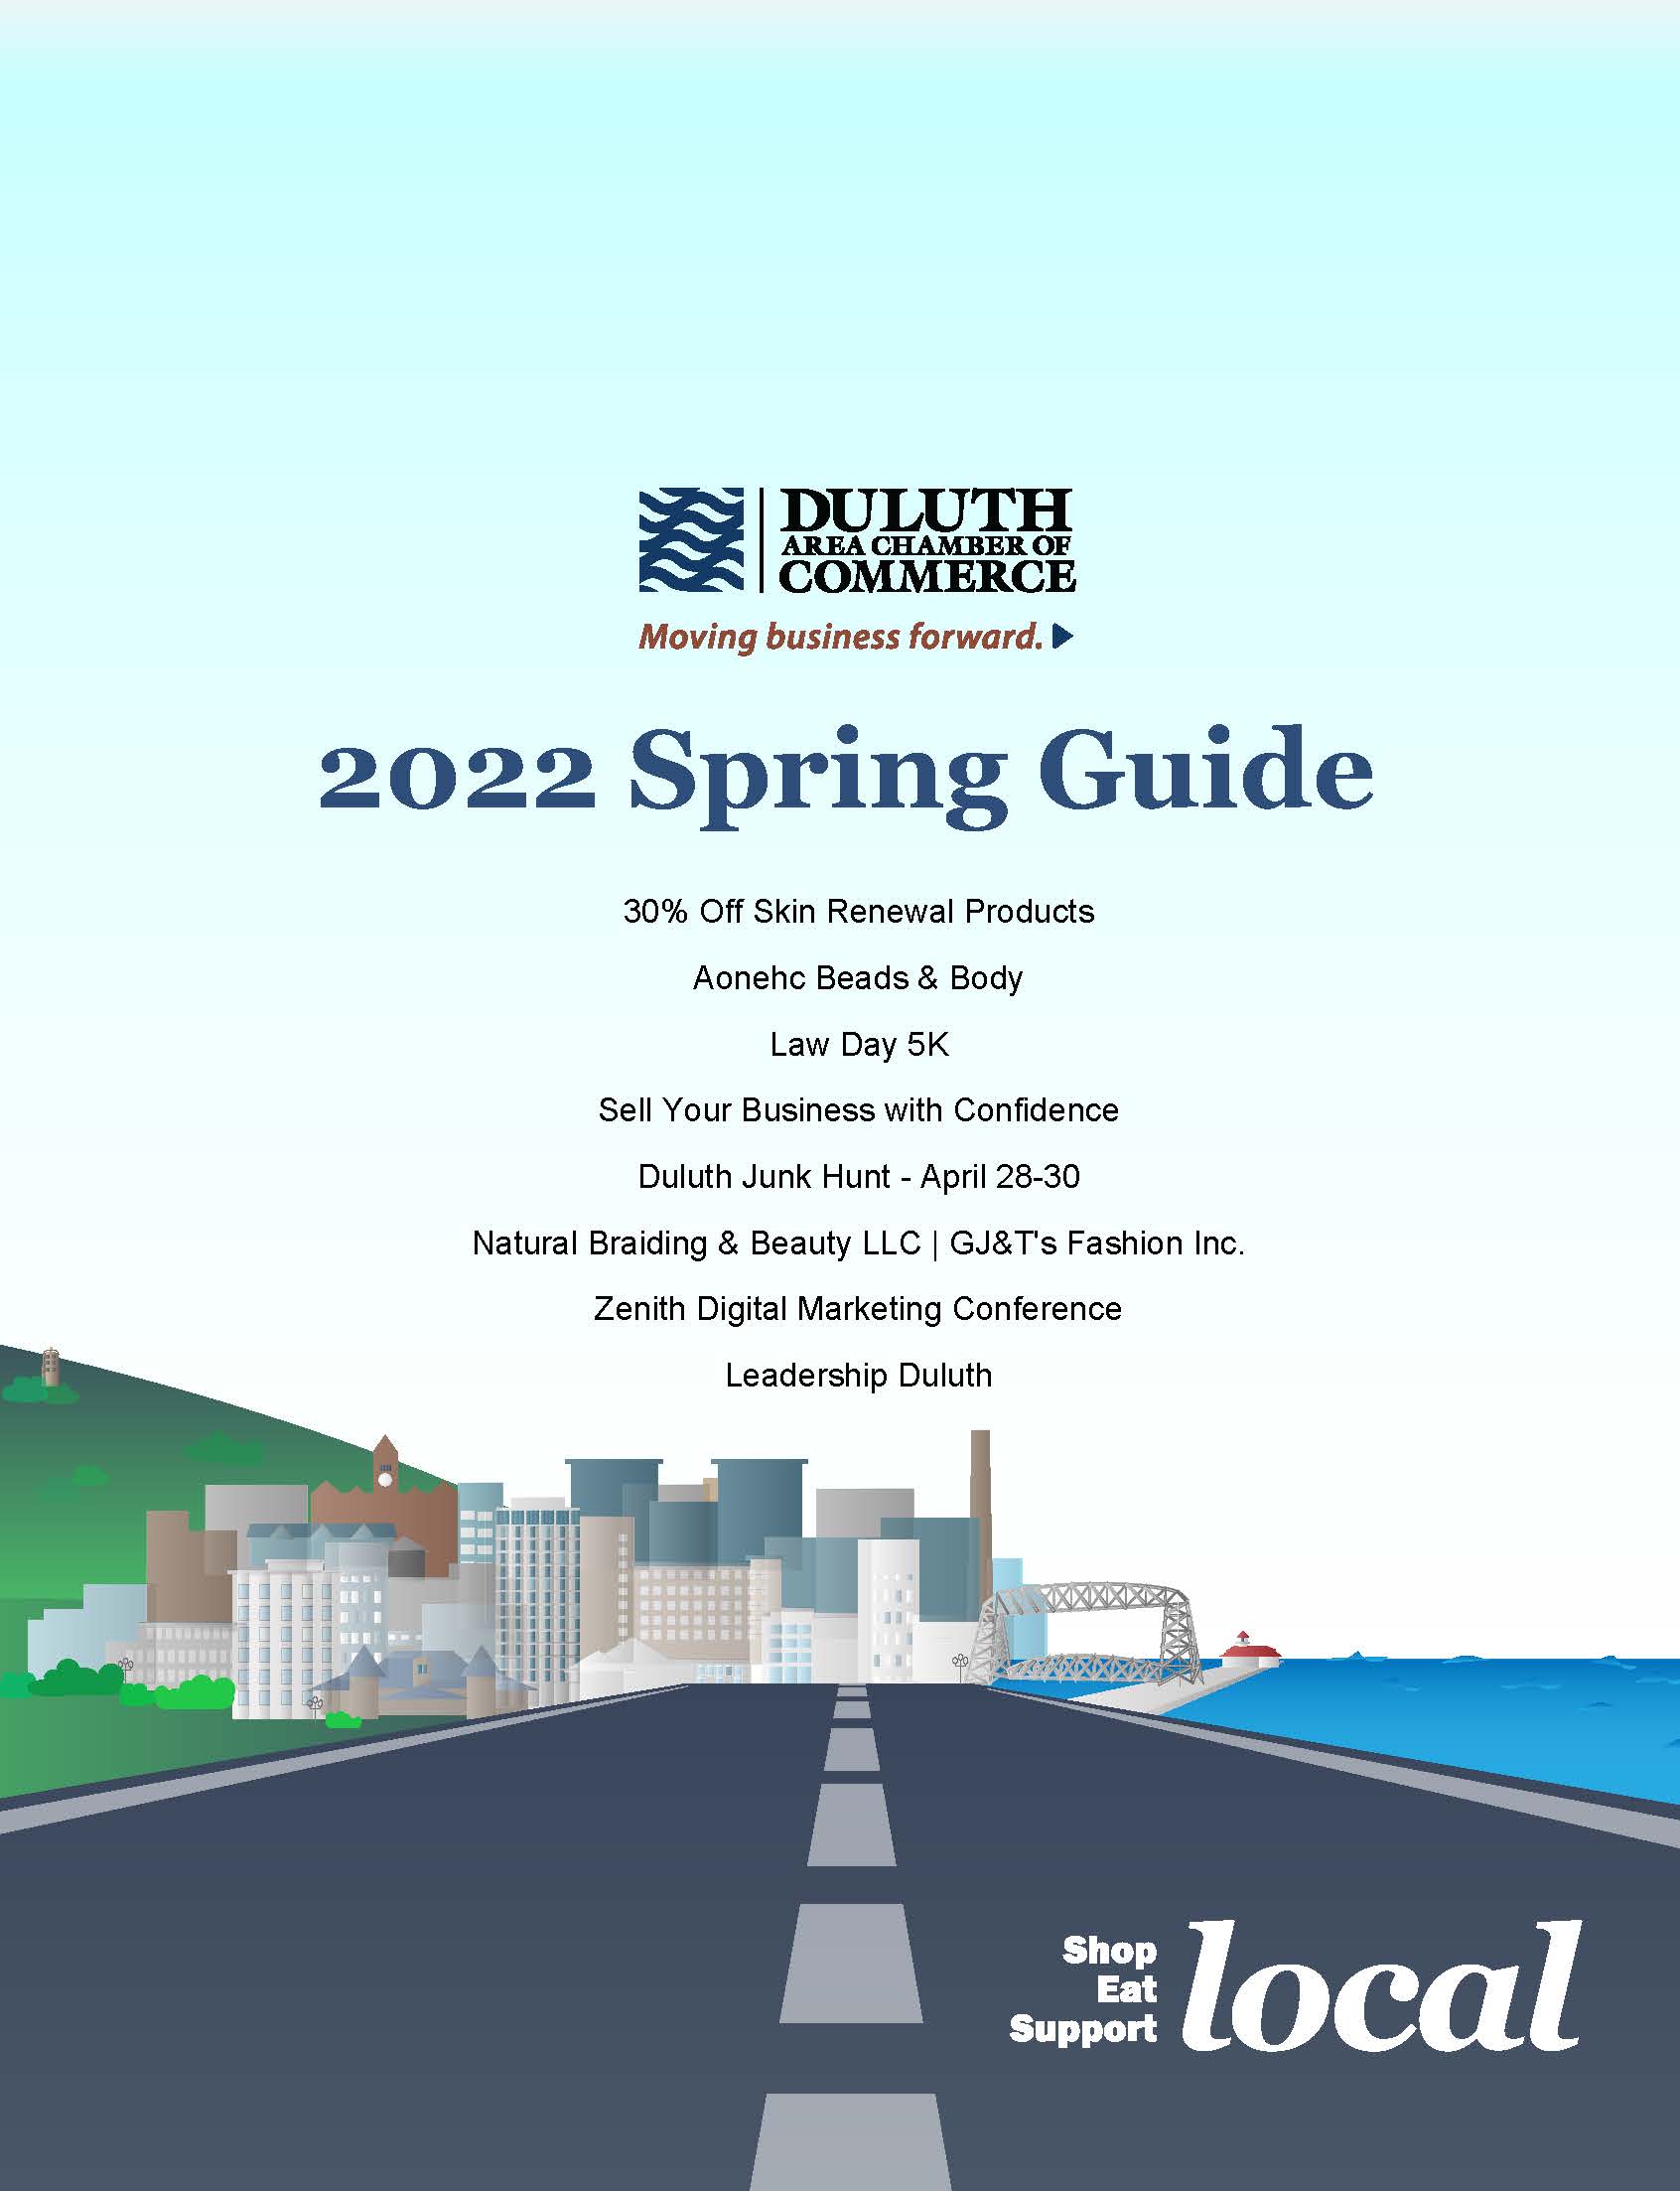 2022 Spring Guide Blog Cover